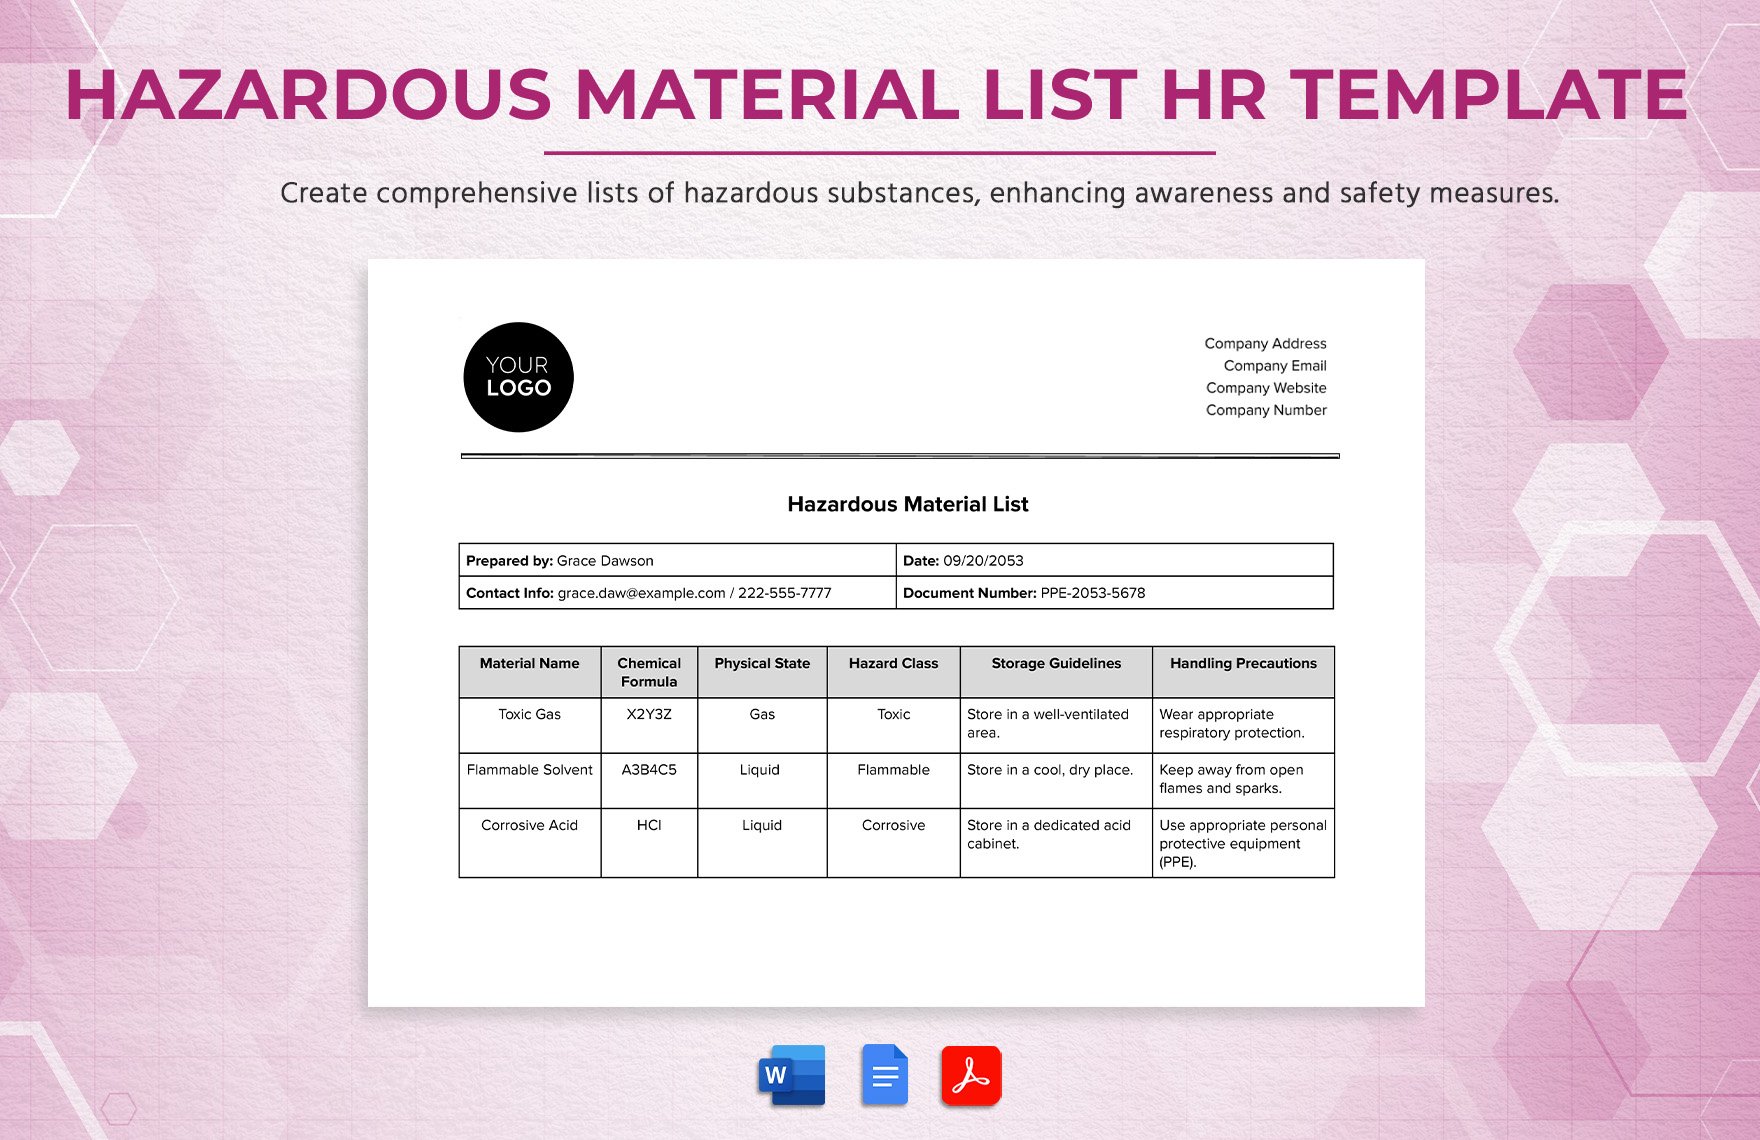 Hazardous Material List HR Template